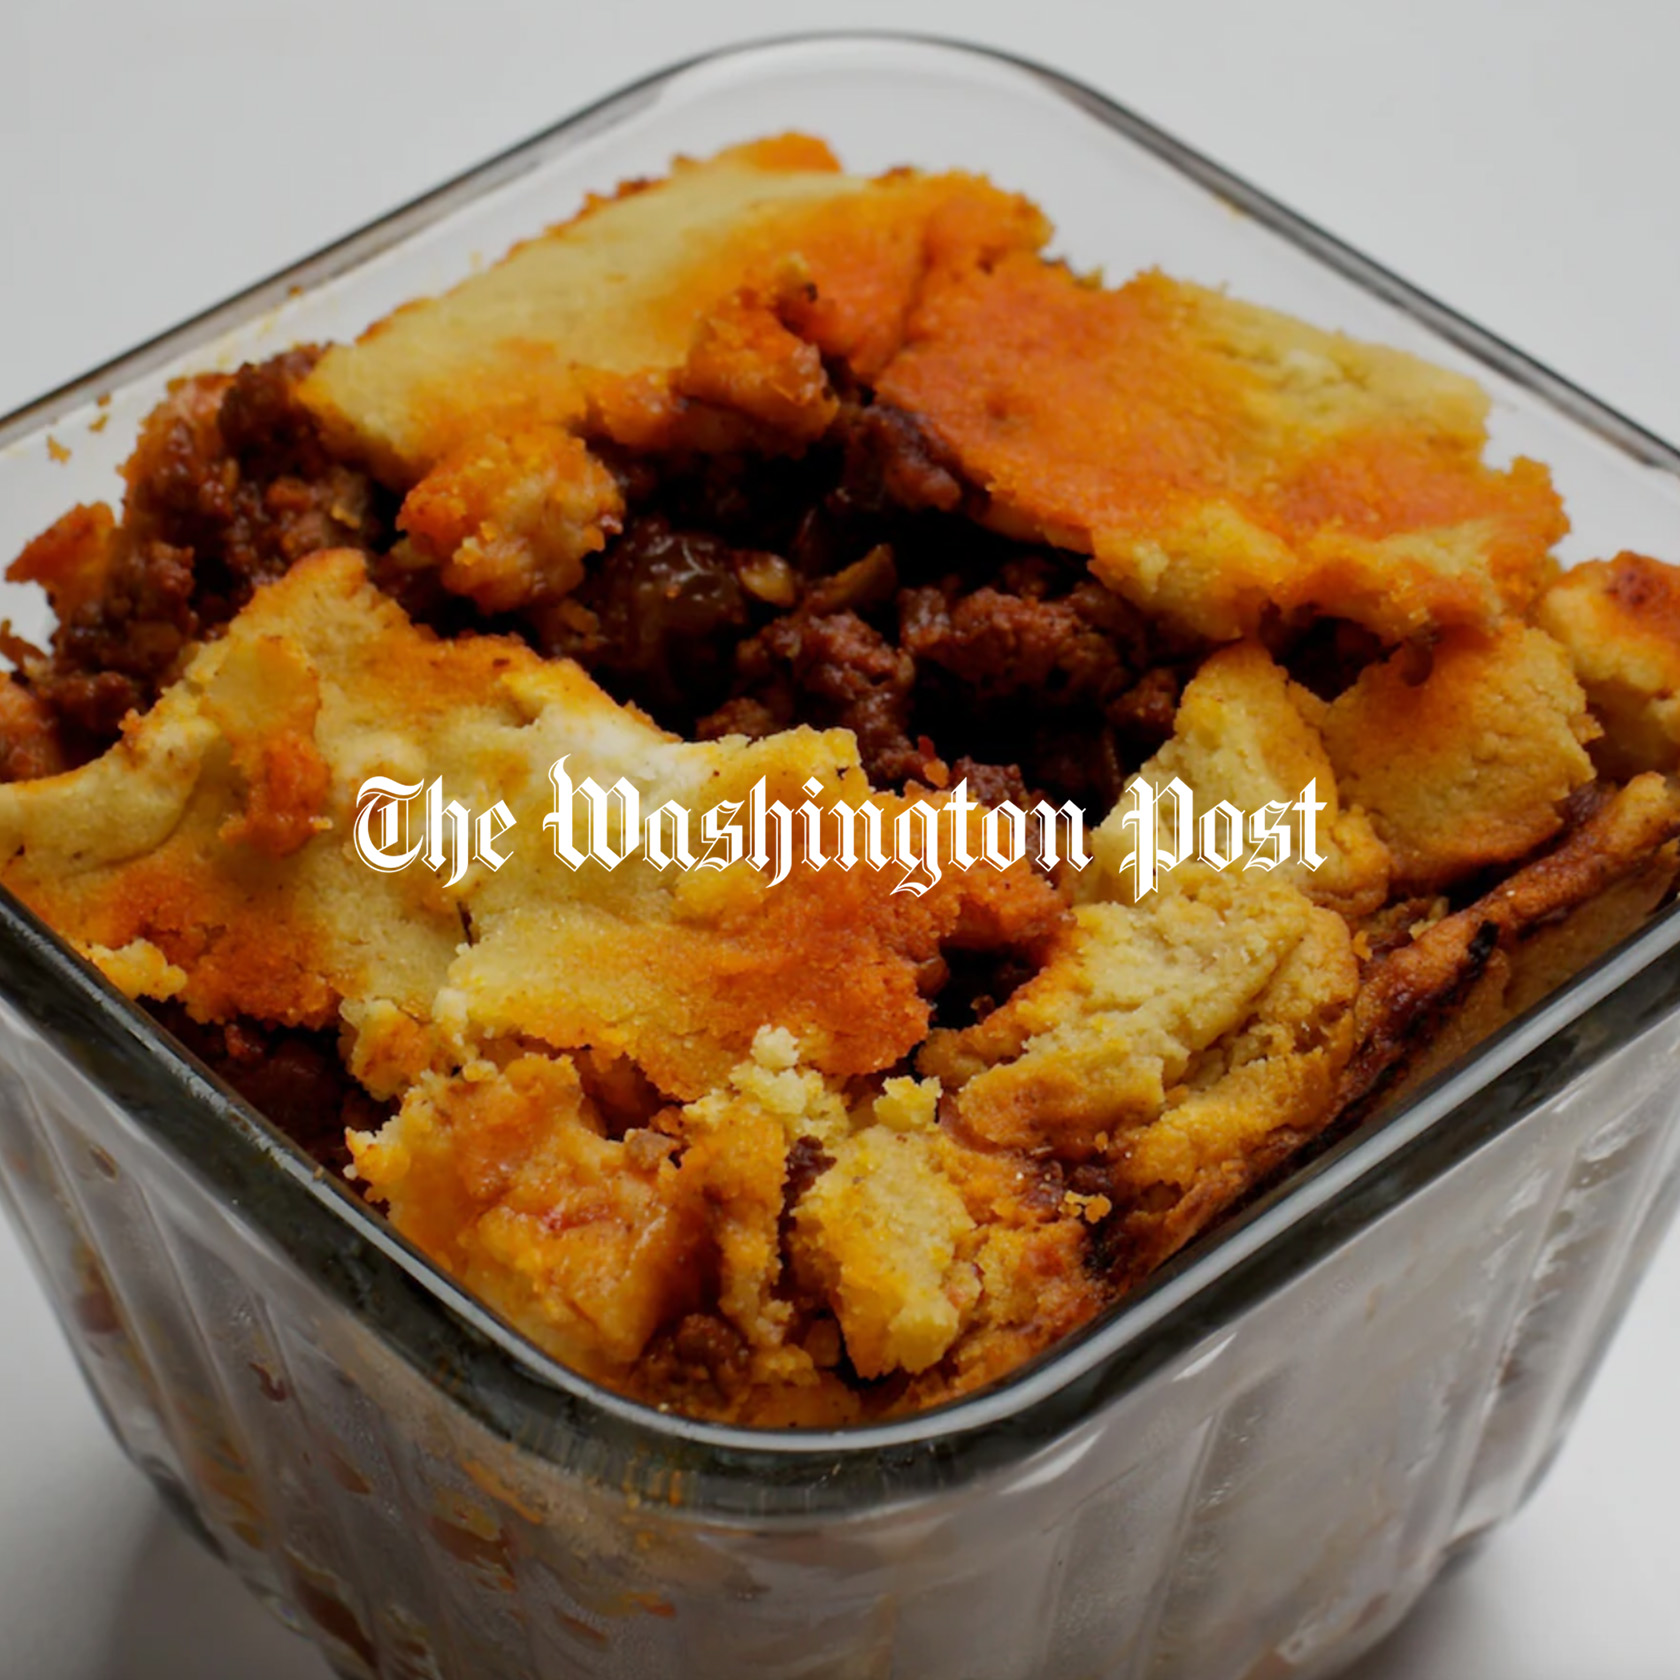 The Washington Post: The Mexican Casserole